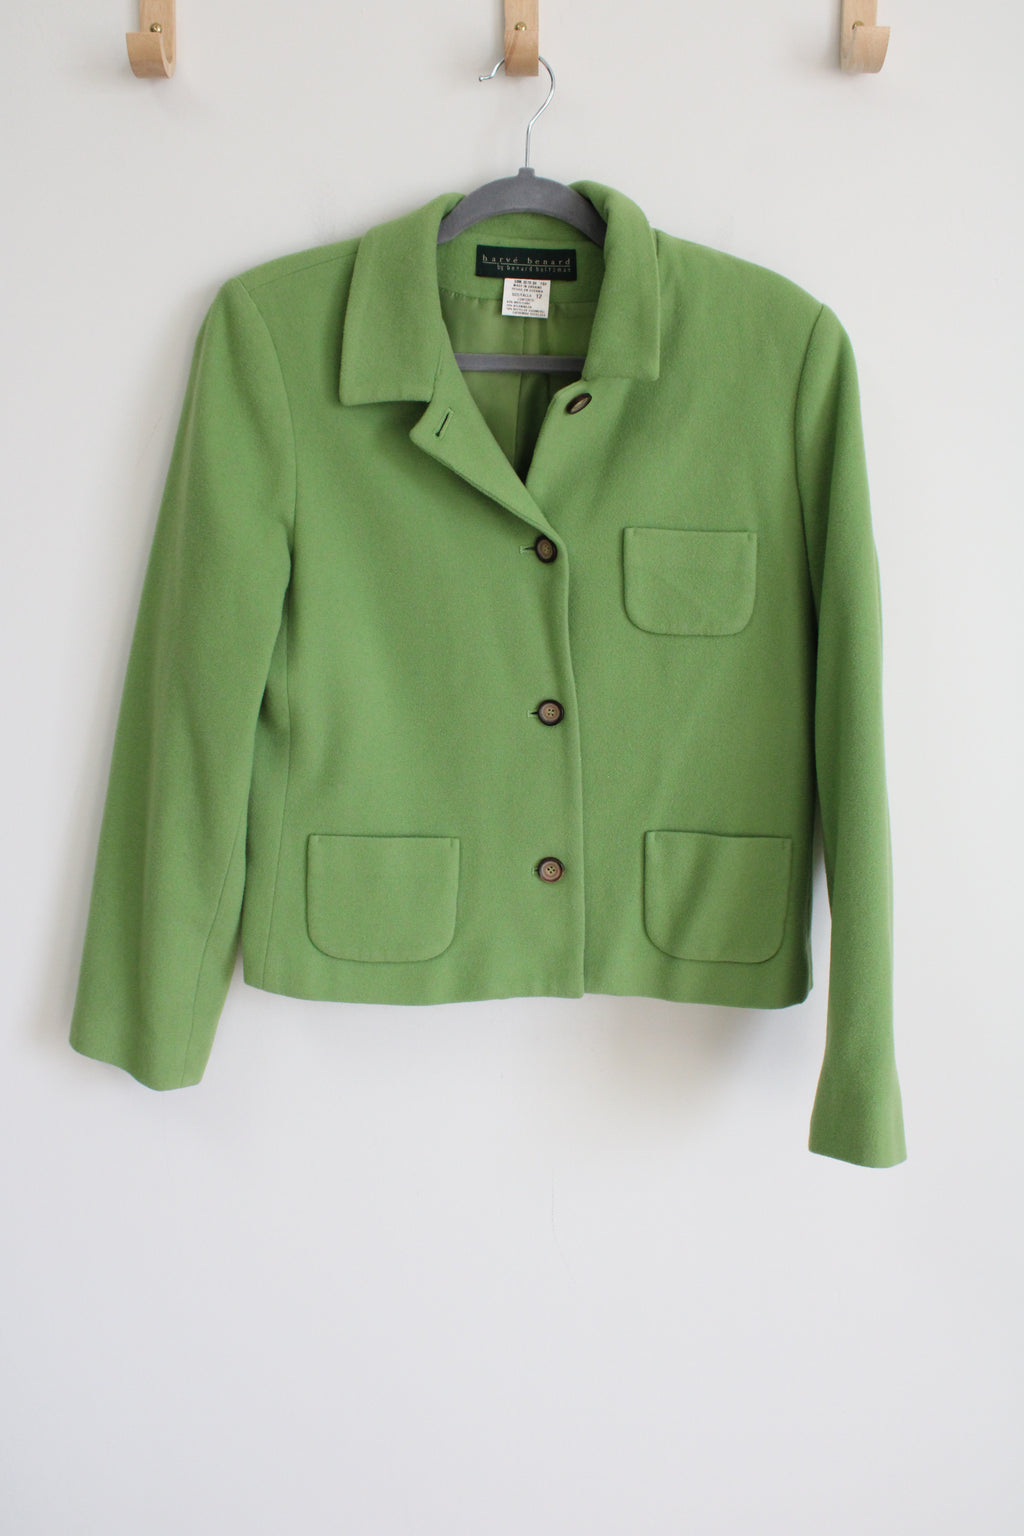 Harve Benard Wool Blend Green Jacket | 12